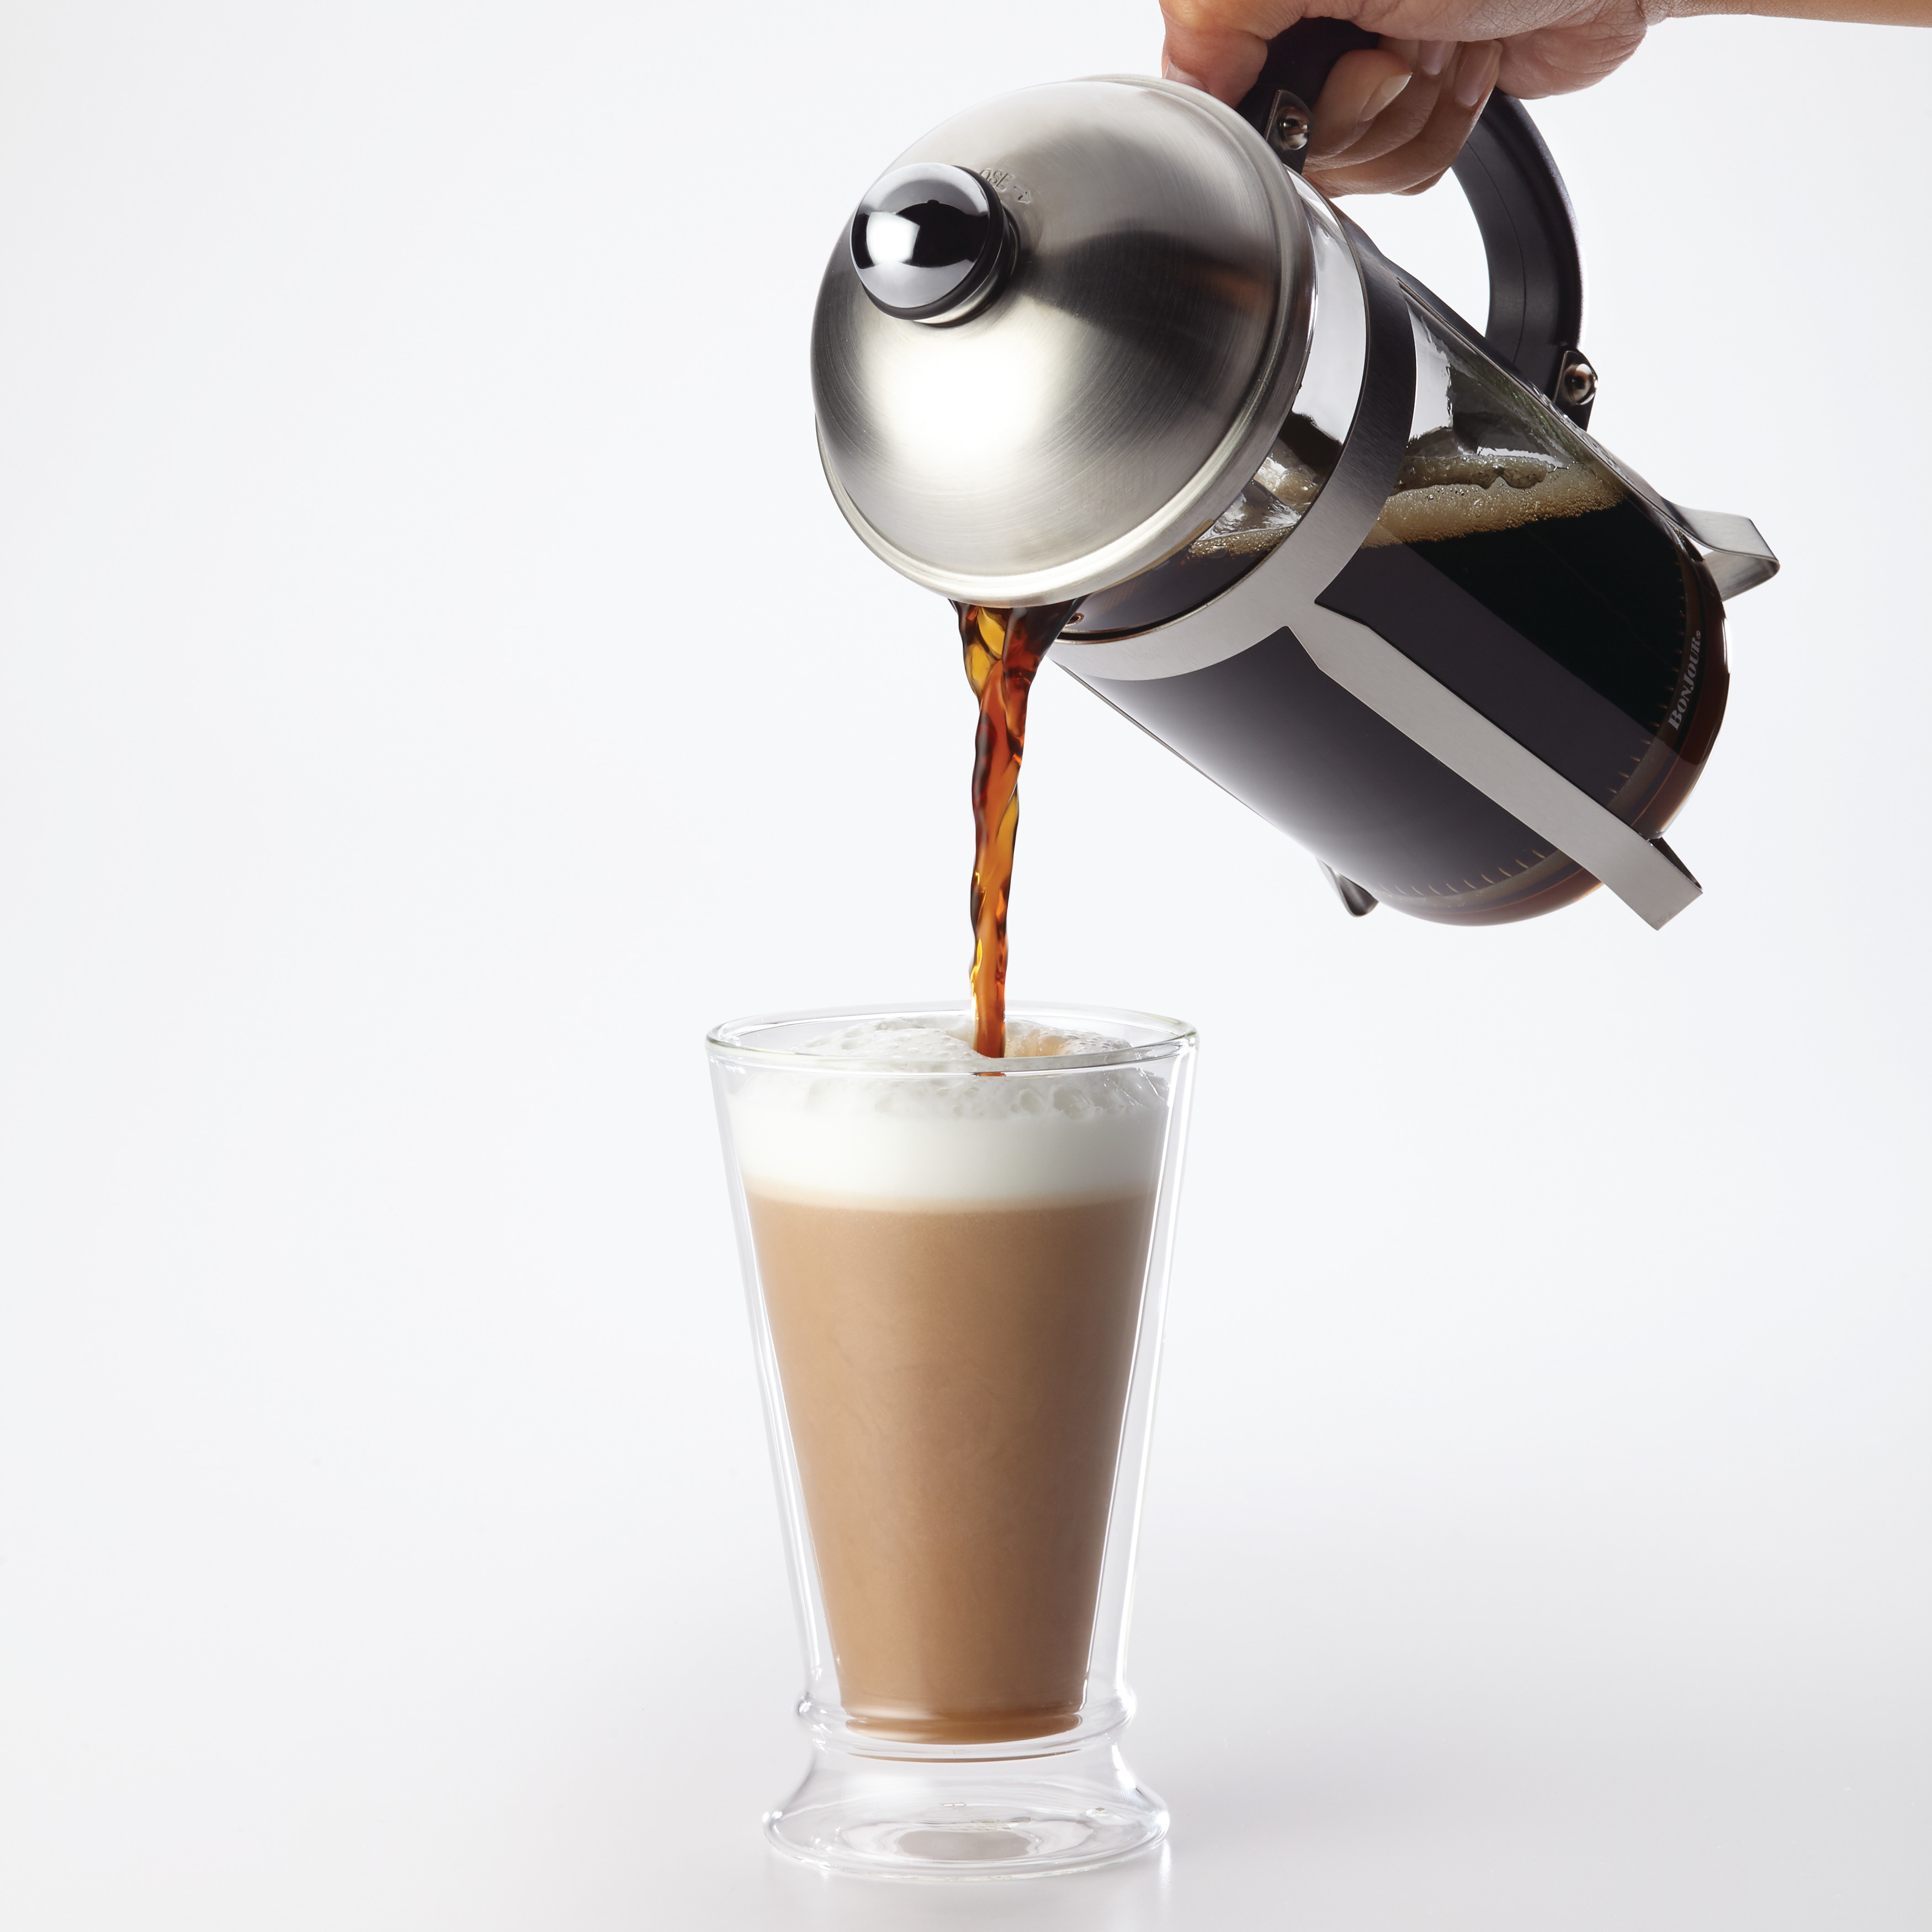 https://ak1.ostkcdn.com/images/products/17665440/BonJour-Primo-Latte-Rechargeable-Hand-Held-Beverage-Whisk-Milk-Frother-76cc696c-cdf2-42df-93ee-af7060e625d8.jpg